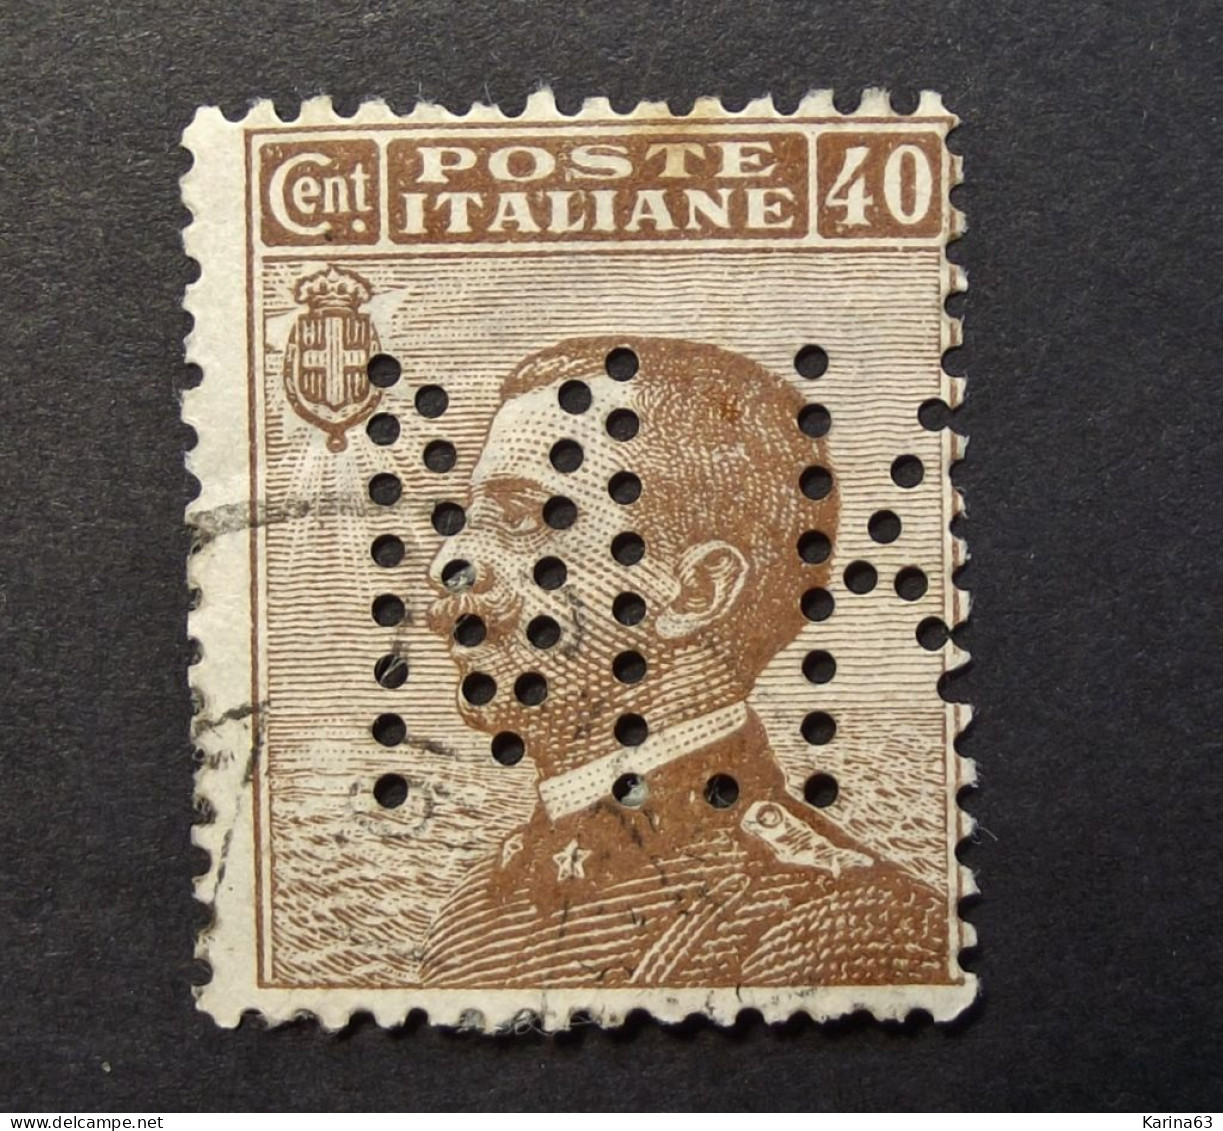 Italia - Italy - 1906 -  Perfin - Lochung -  M.K -   Moroni E Keller - Venezia  -  Cancelled - Afgestempeld